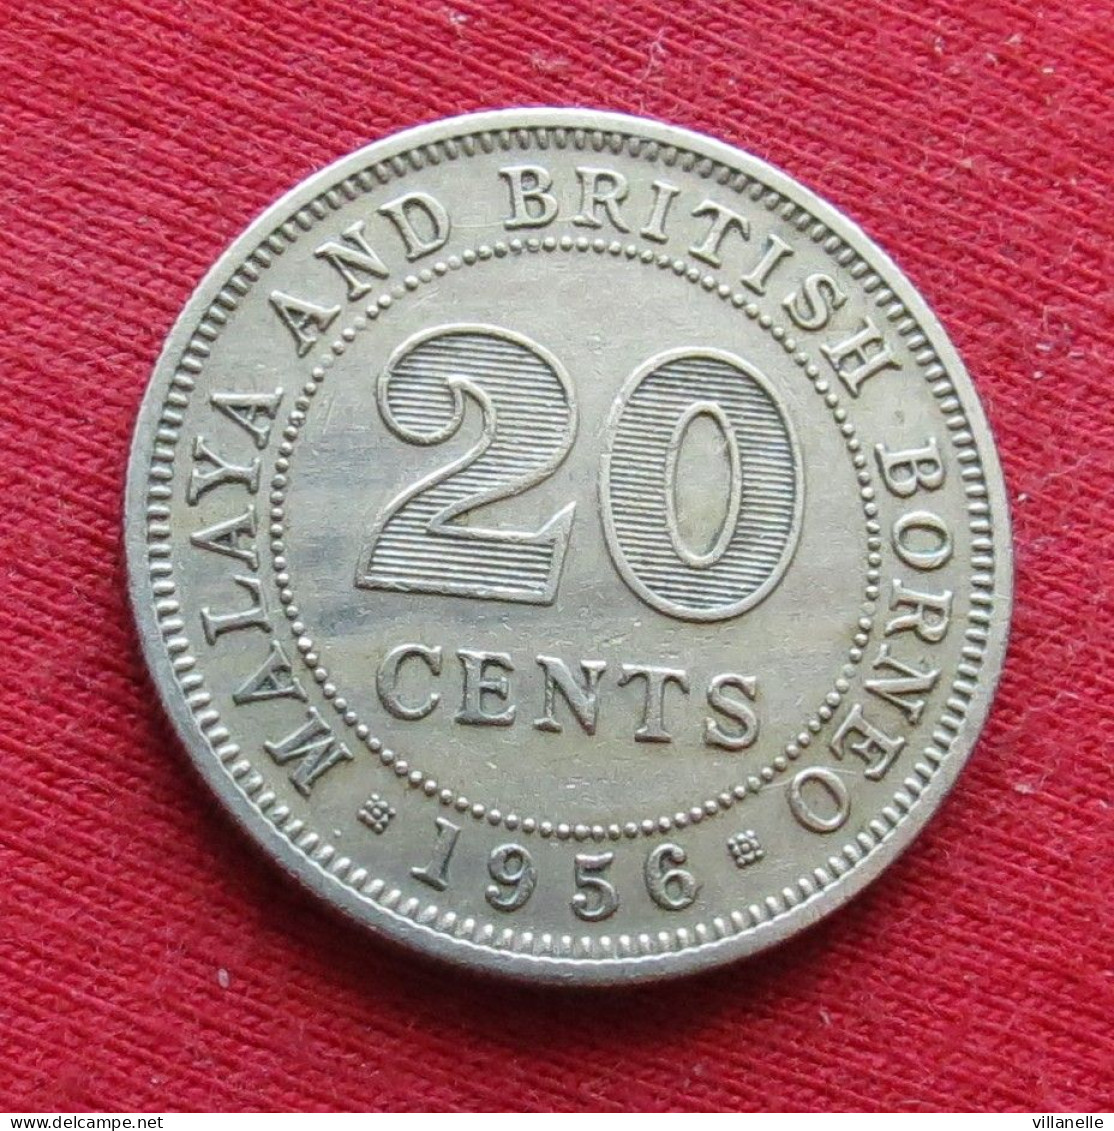 Malaya And British Borneo 20 Cents 1956 W ºº - Malesia